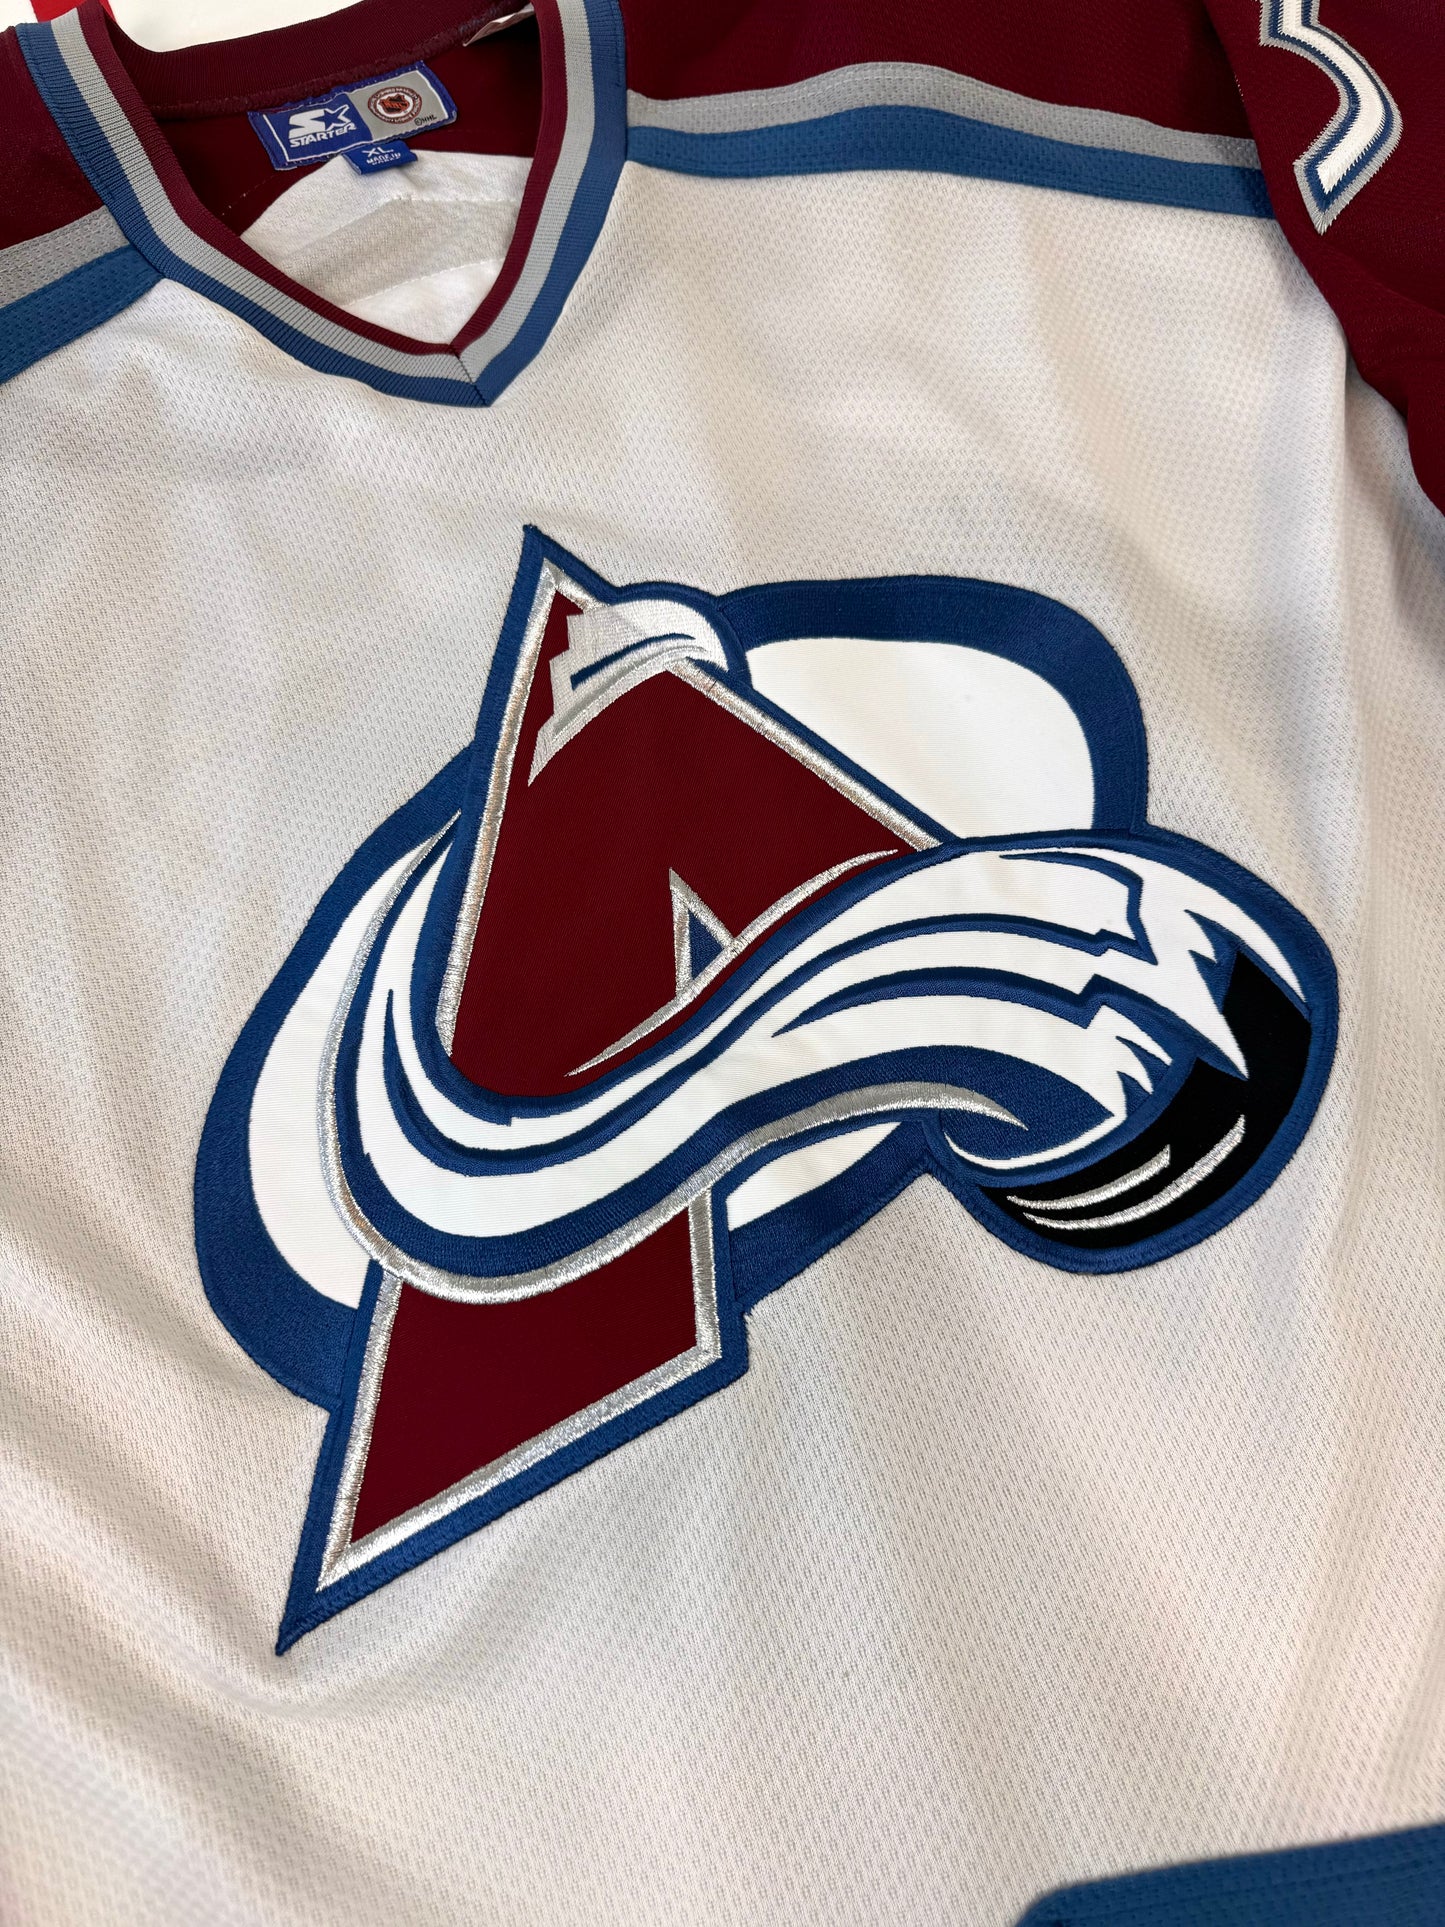 Colorado Avalanche 1996-1999 Patrick Roy NHL Hockey Jersey (XL)